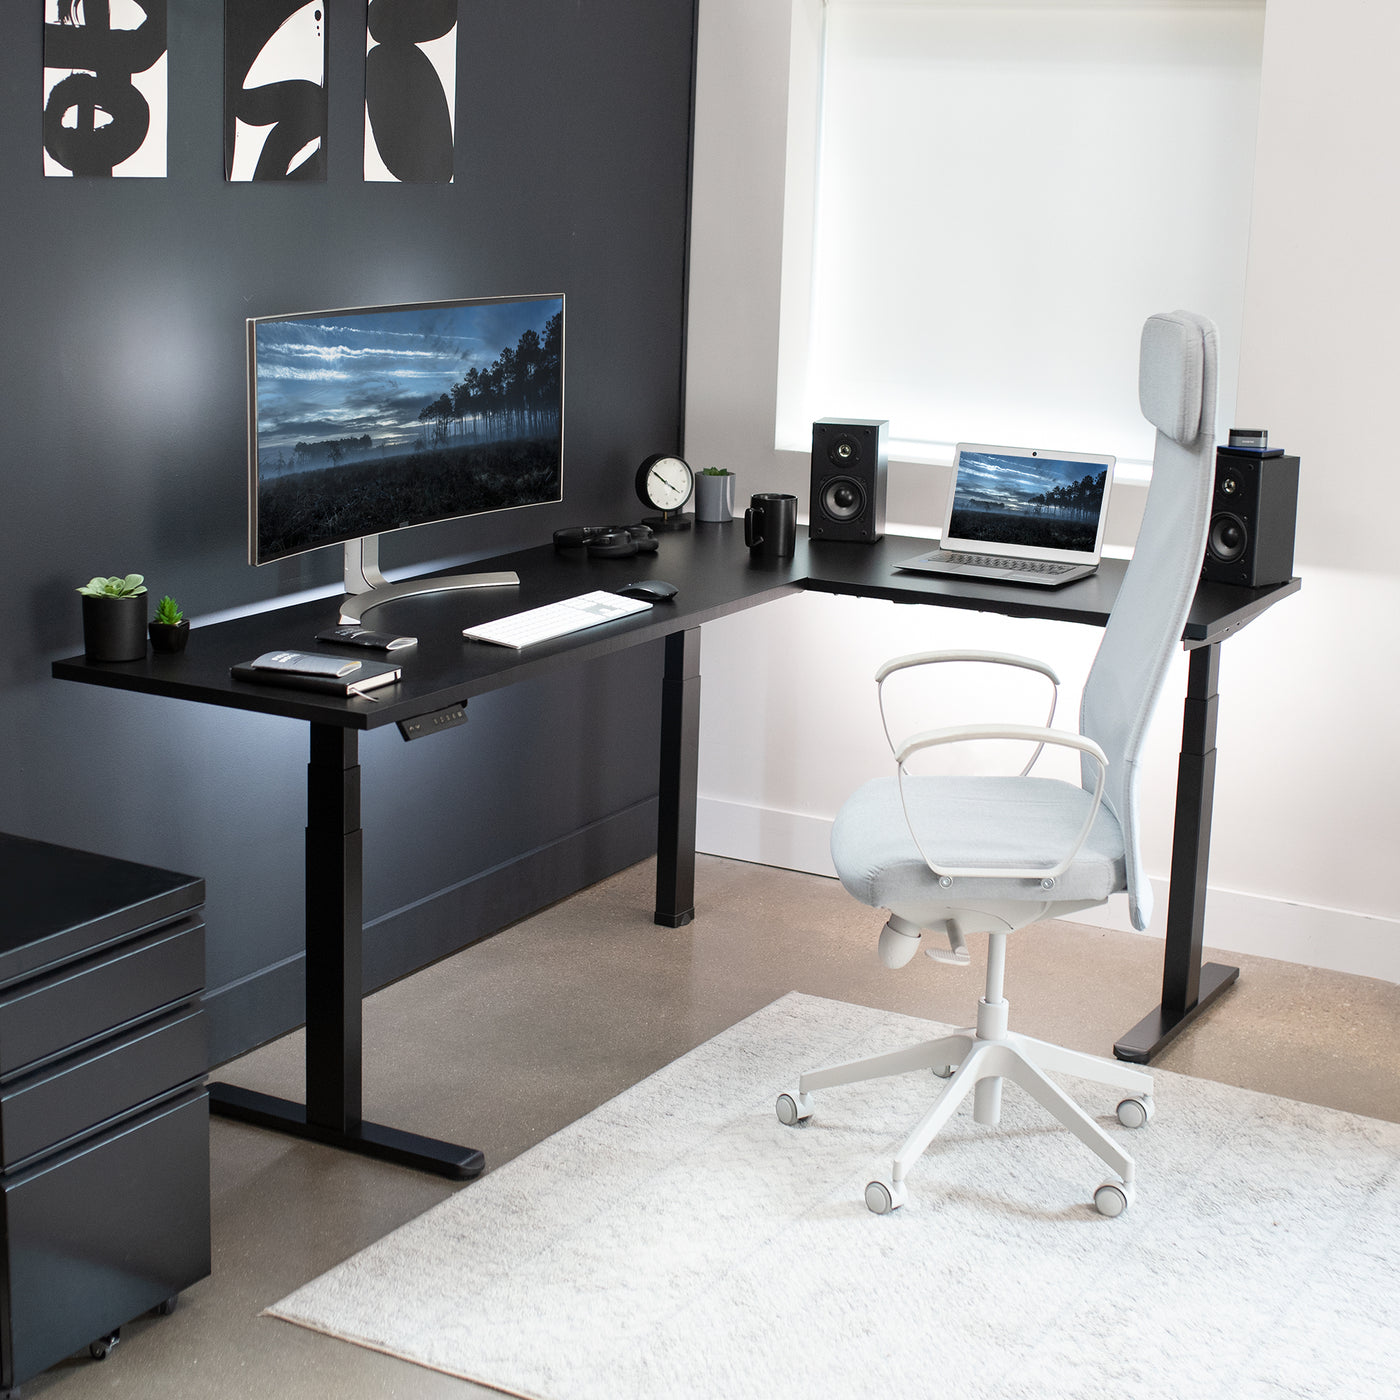 Large electric heavy-duty corner desk workstation for modern office workspaces.